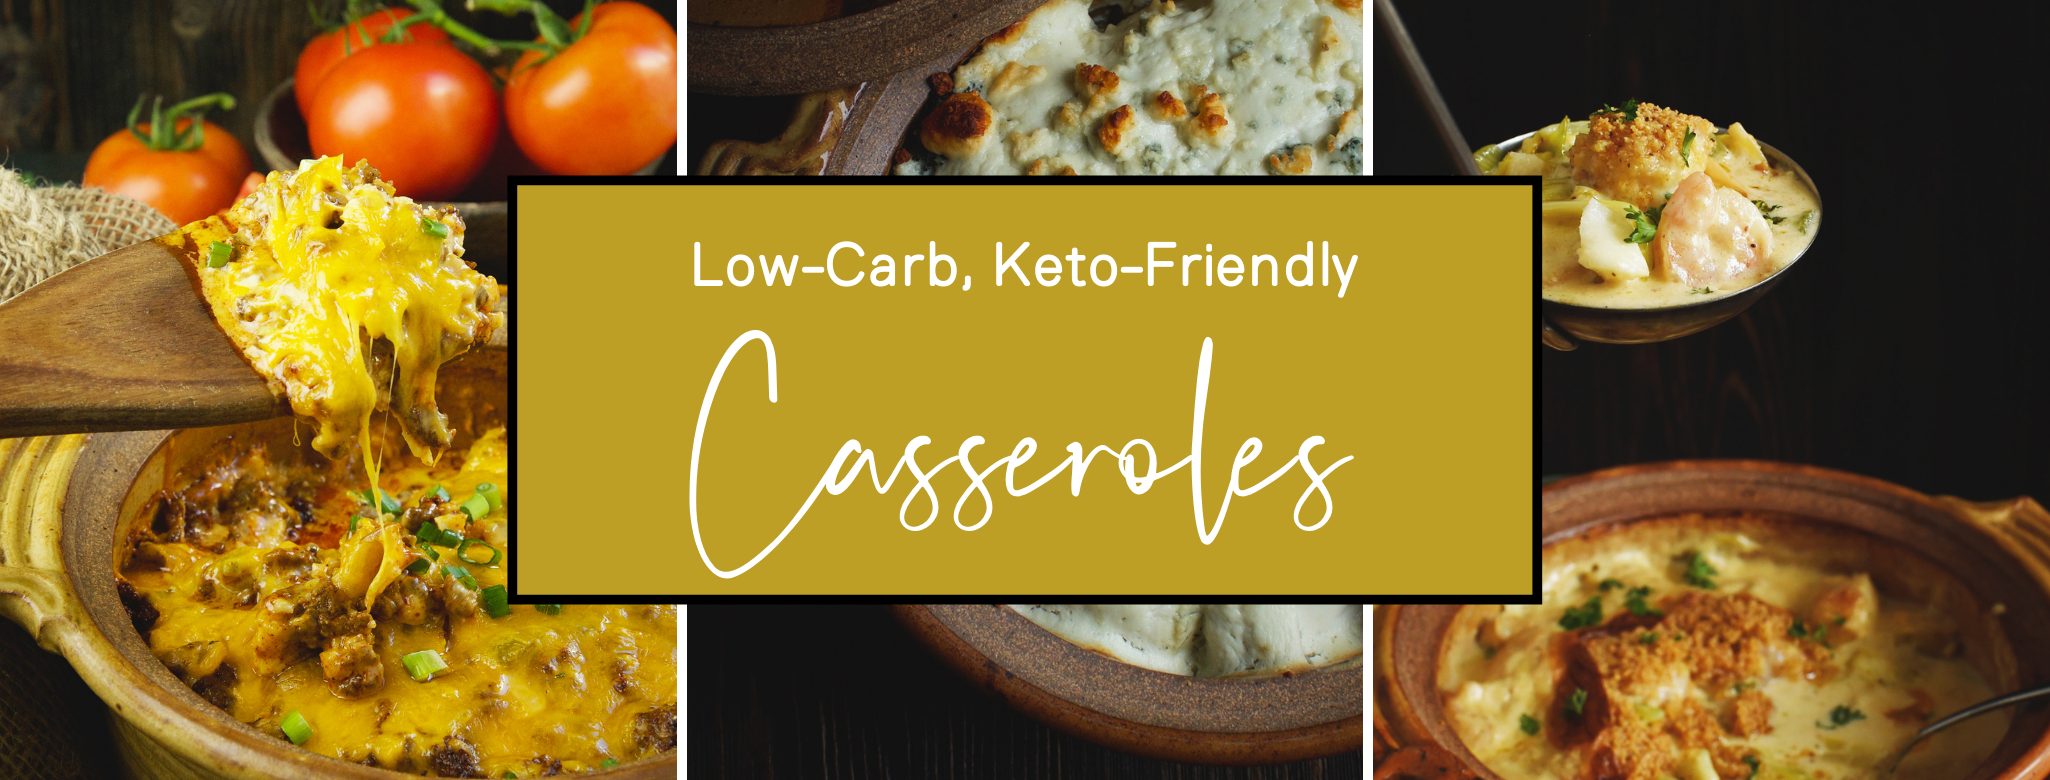 Low-Carb, Keto-Friendly Casseroles